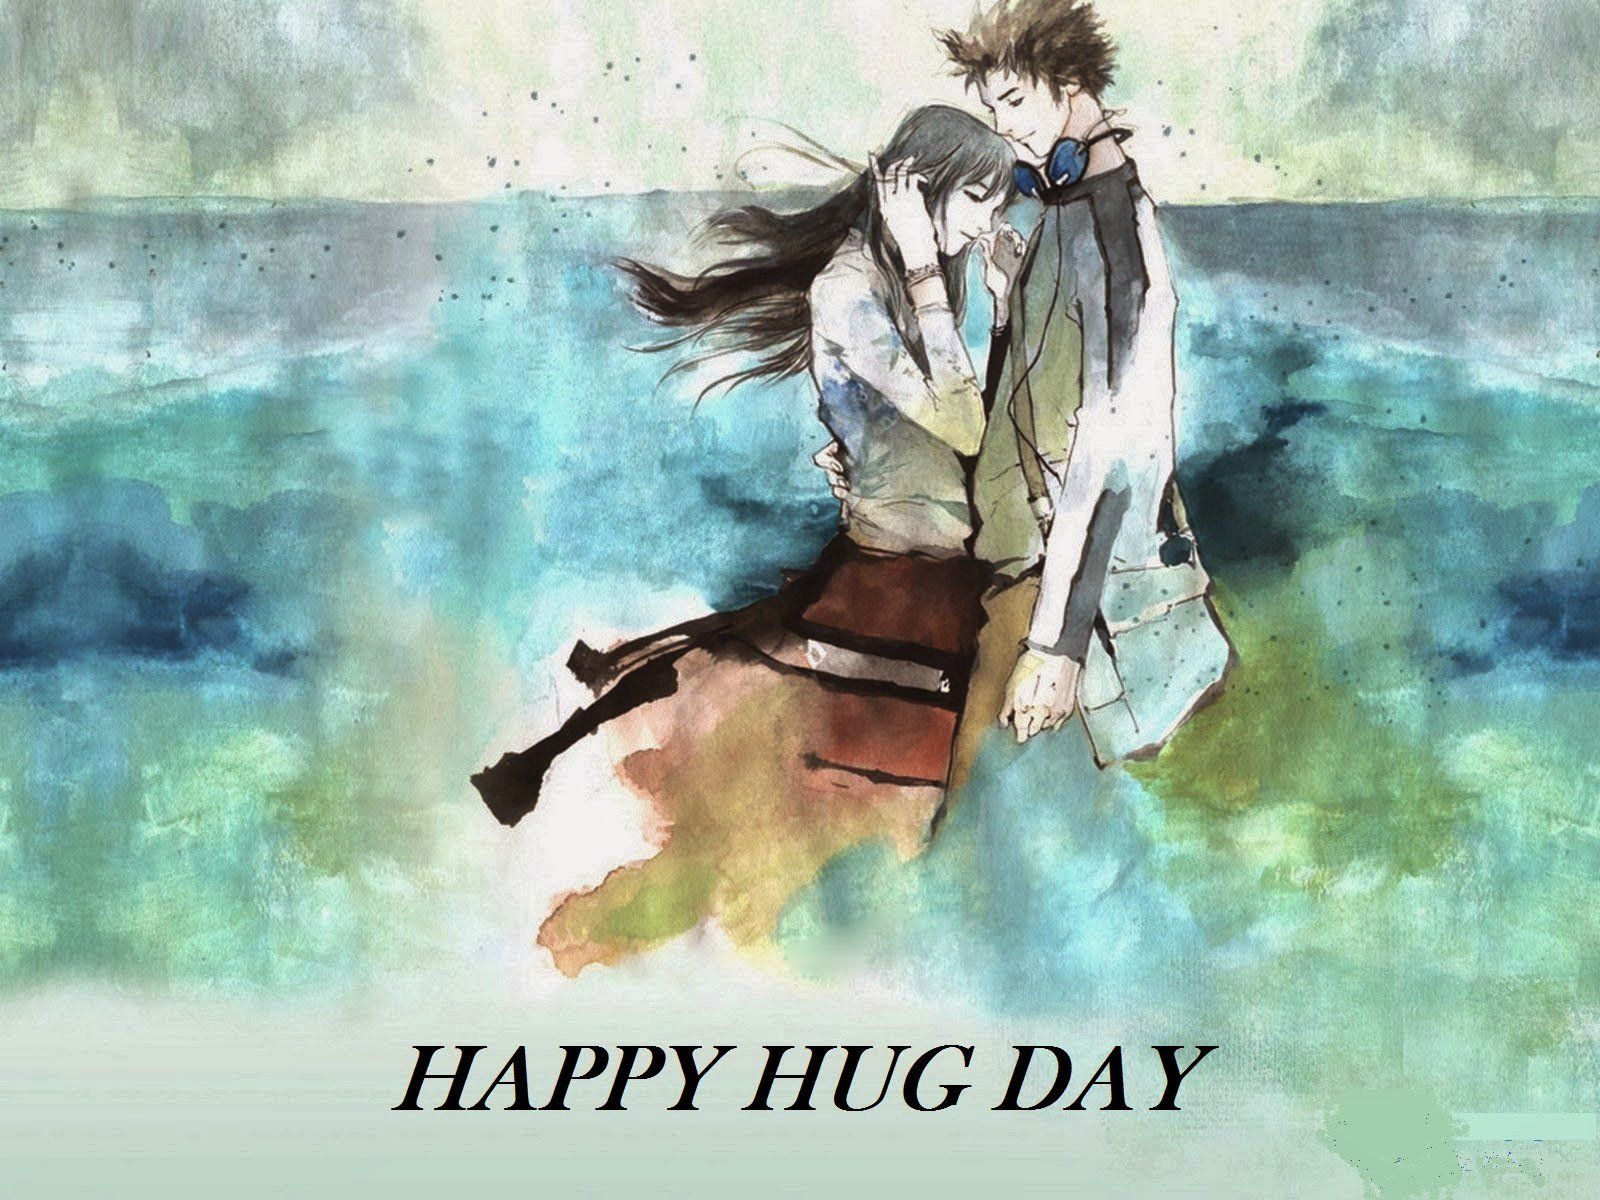 Hug hugging couple love mood people men women happy original anime poster wallpaperx1200